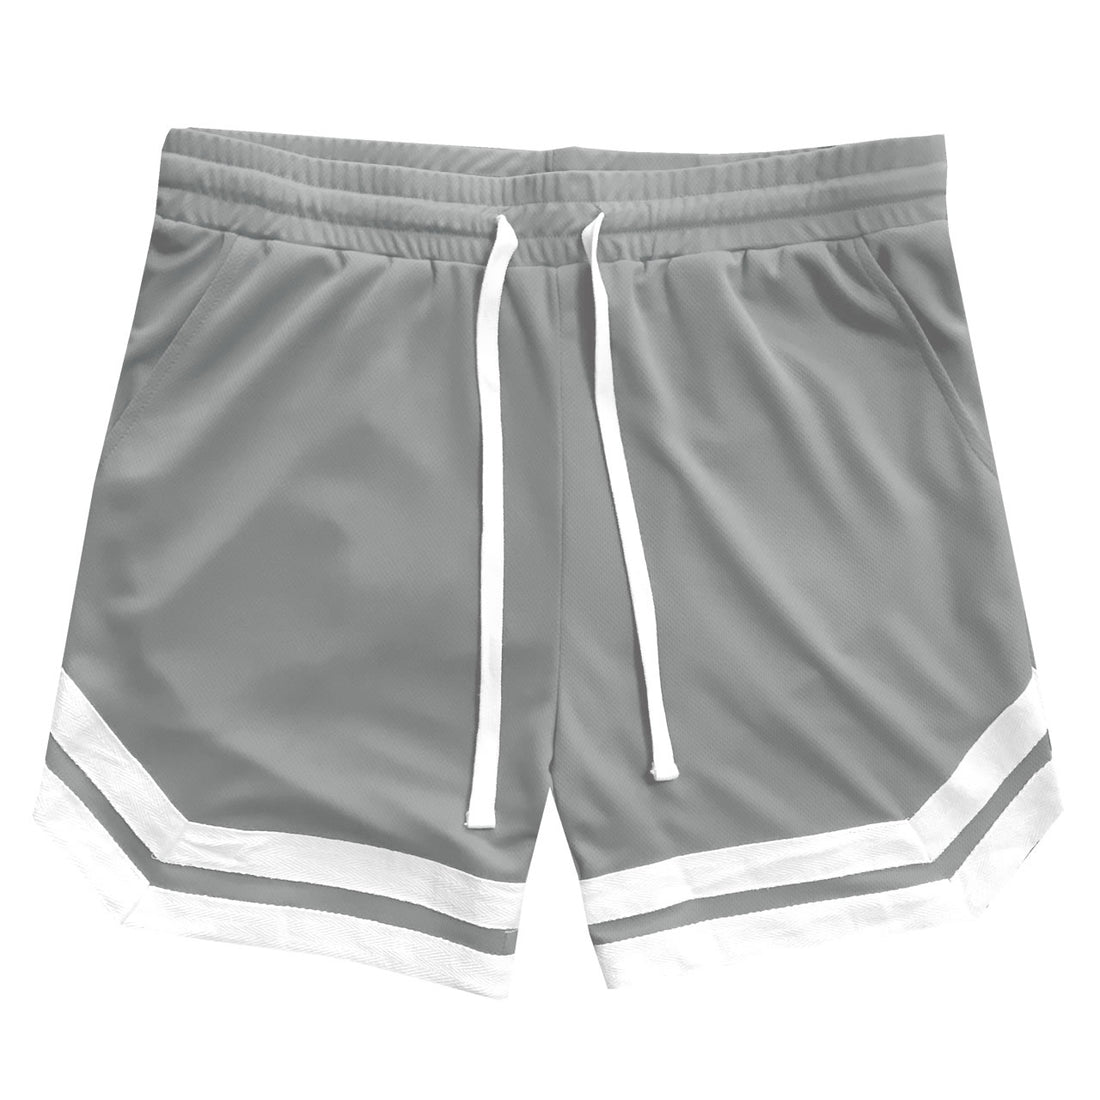 Light Grey Vintage Striped Mesh Basketball Shorts